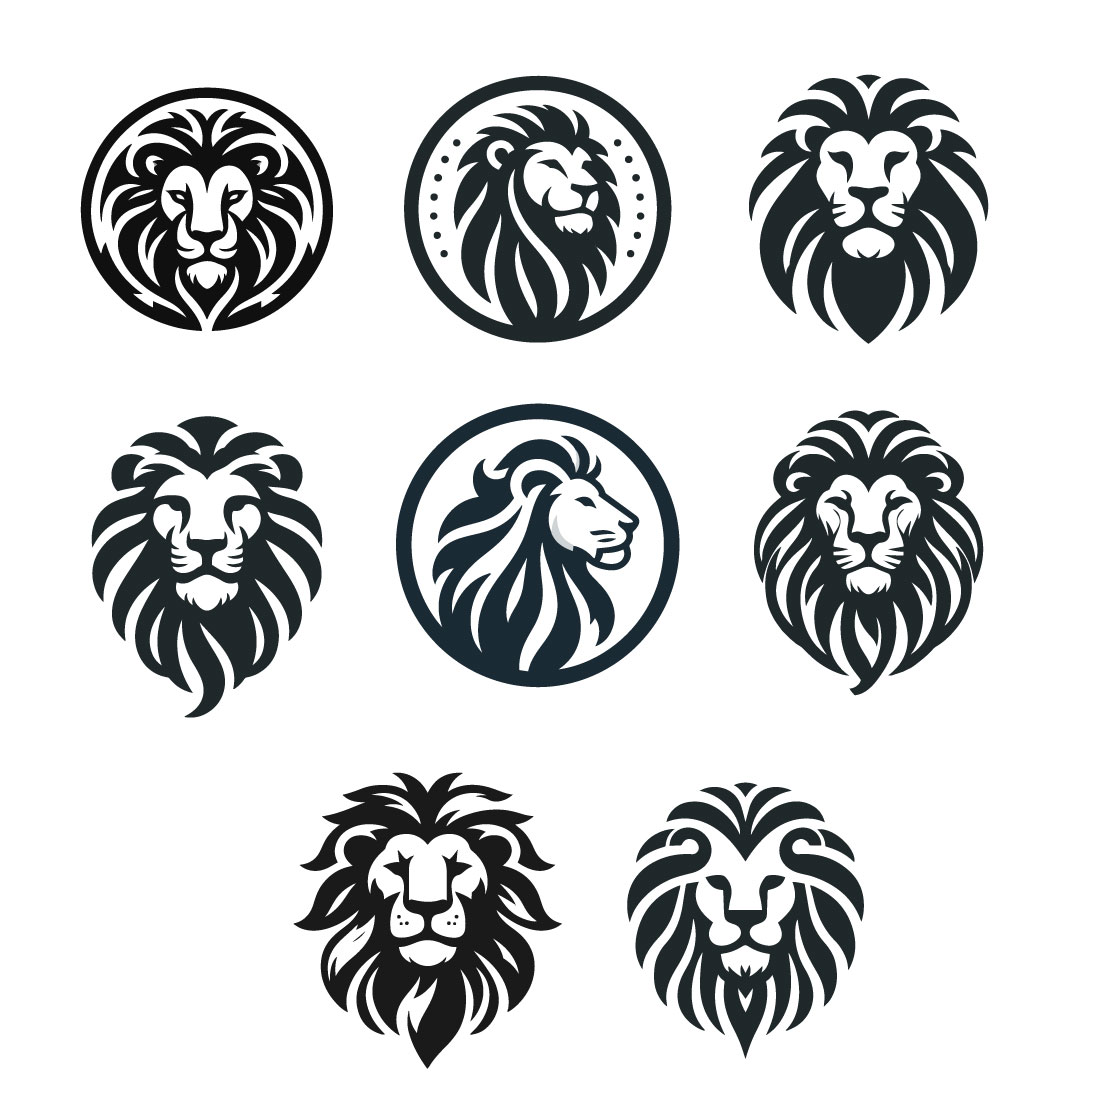 8 lion logos vector illustration preview 453